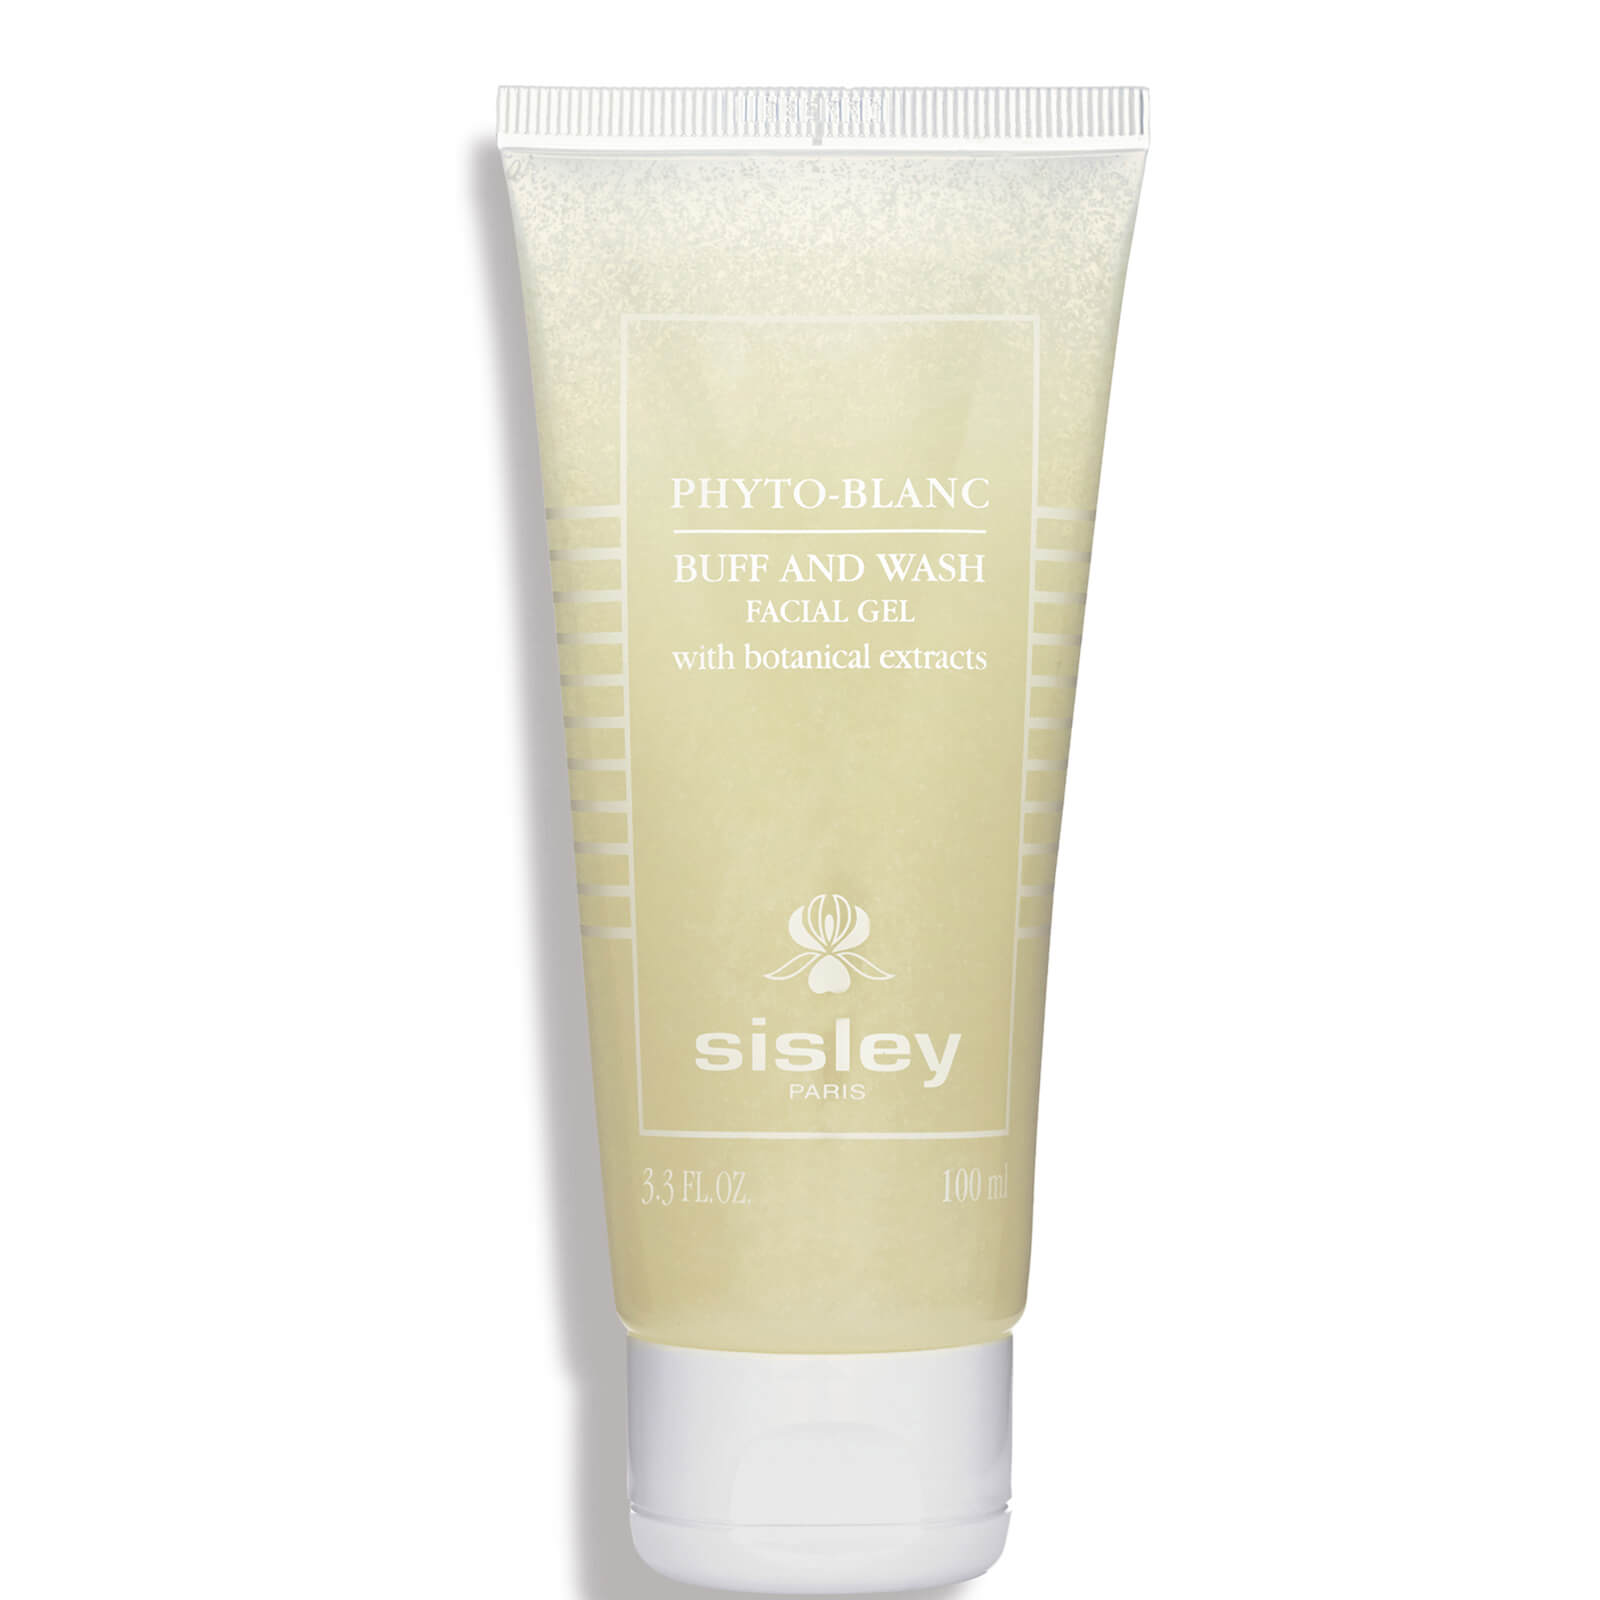 Photos - Facial / Body Cleansing Product Sisley PARIS Phyto-Blanc Buff and Wash Facial Gel 100ml 